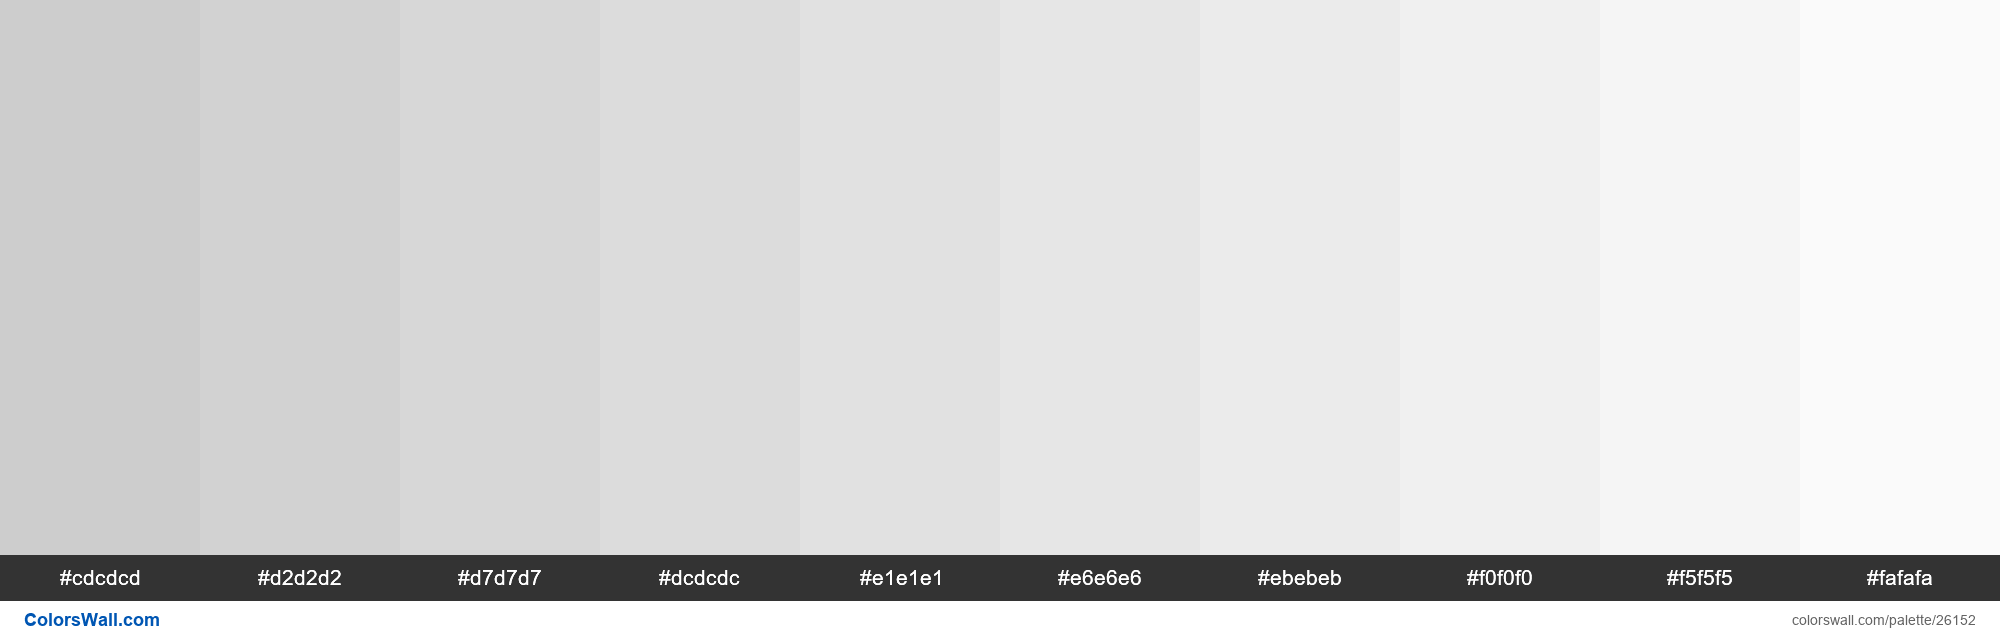 colorswall on X: Tints of Very Light Grey color #CDCDCD hex #cdcdcd,  #d2d2d2, #d7d7d7, #dcdcdc, #e1e1e1, #e6e6e6, #ebebeb, #f0f0f0, #f5f5f5,  #fafafa #colors #palette   /  X